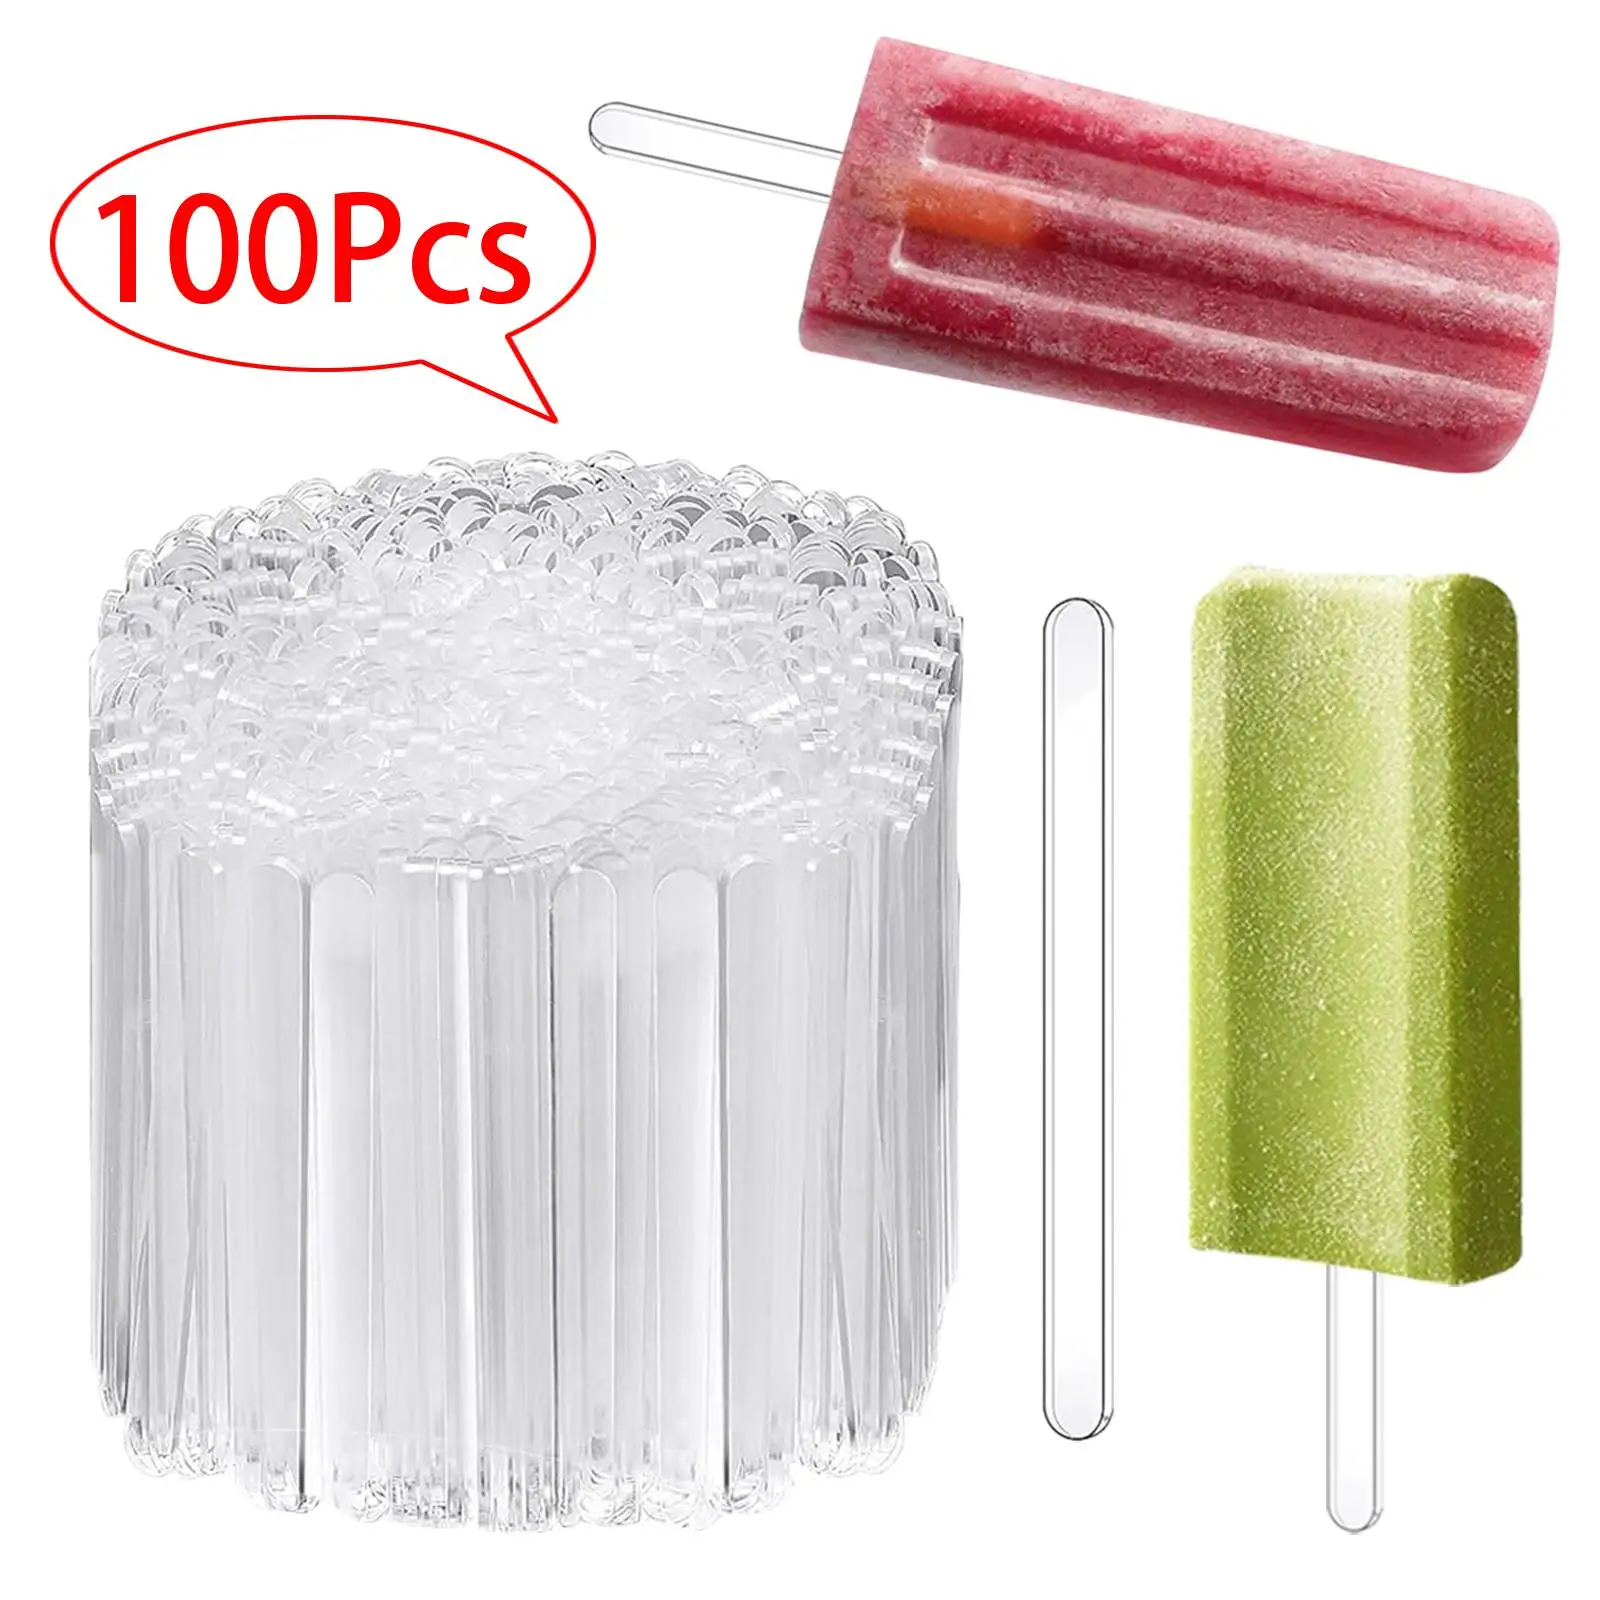 100Pcs Ice Cream Sticks Multipurpose Party Favors Reusable Portable Acrylic Ice Bar Sticks for Home Snack Kitchen Wedding